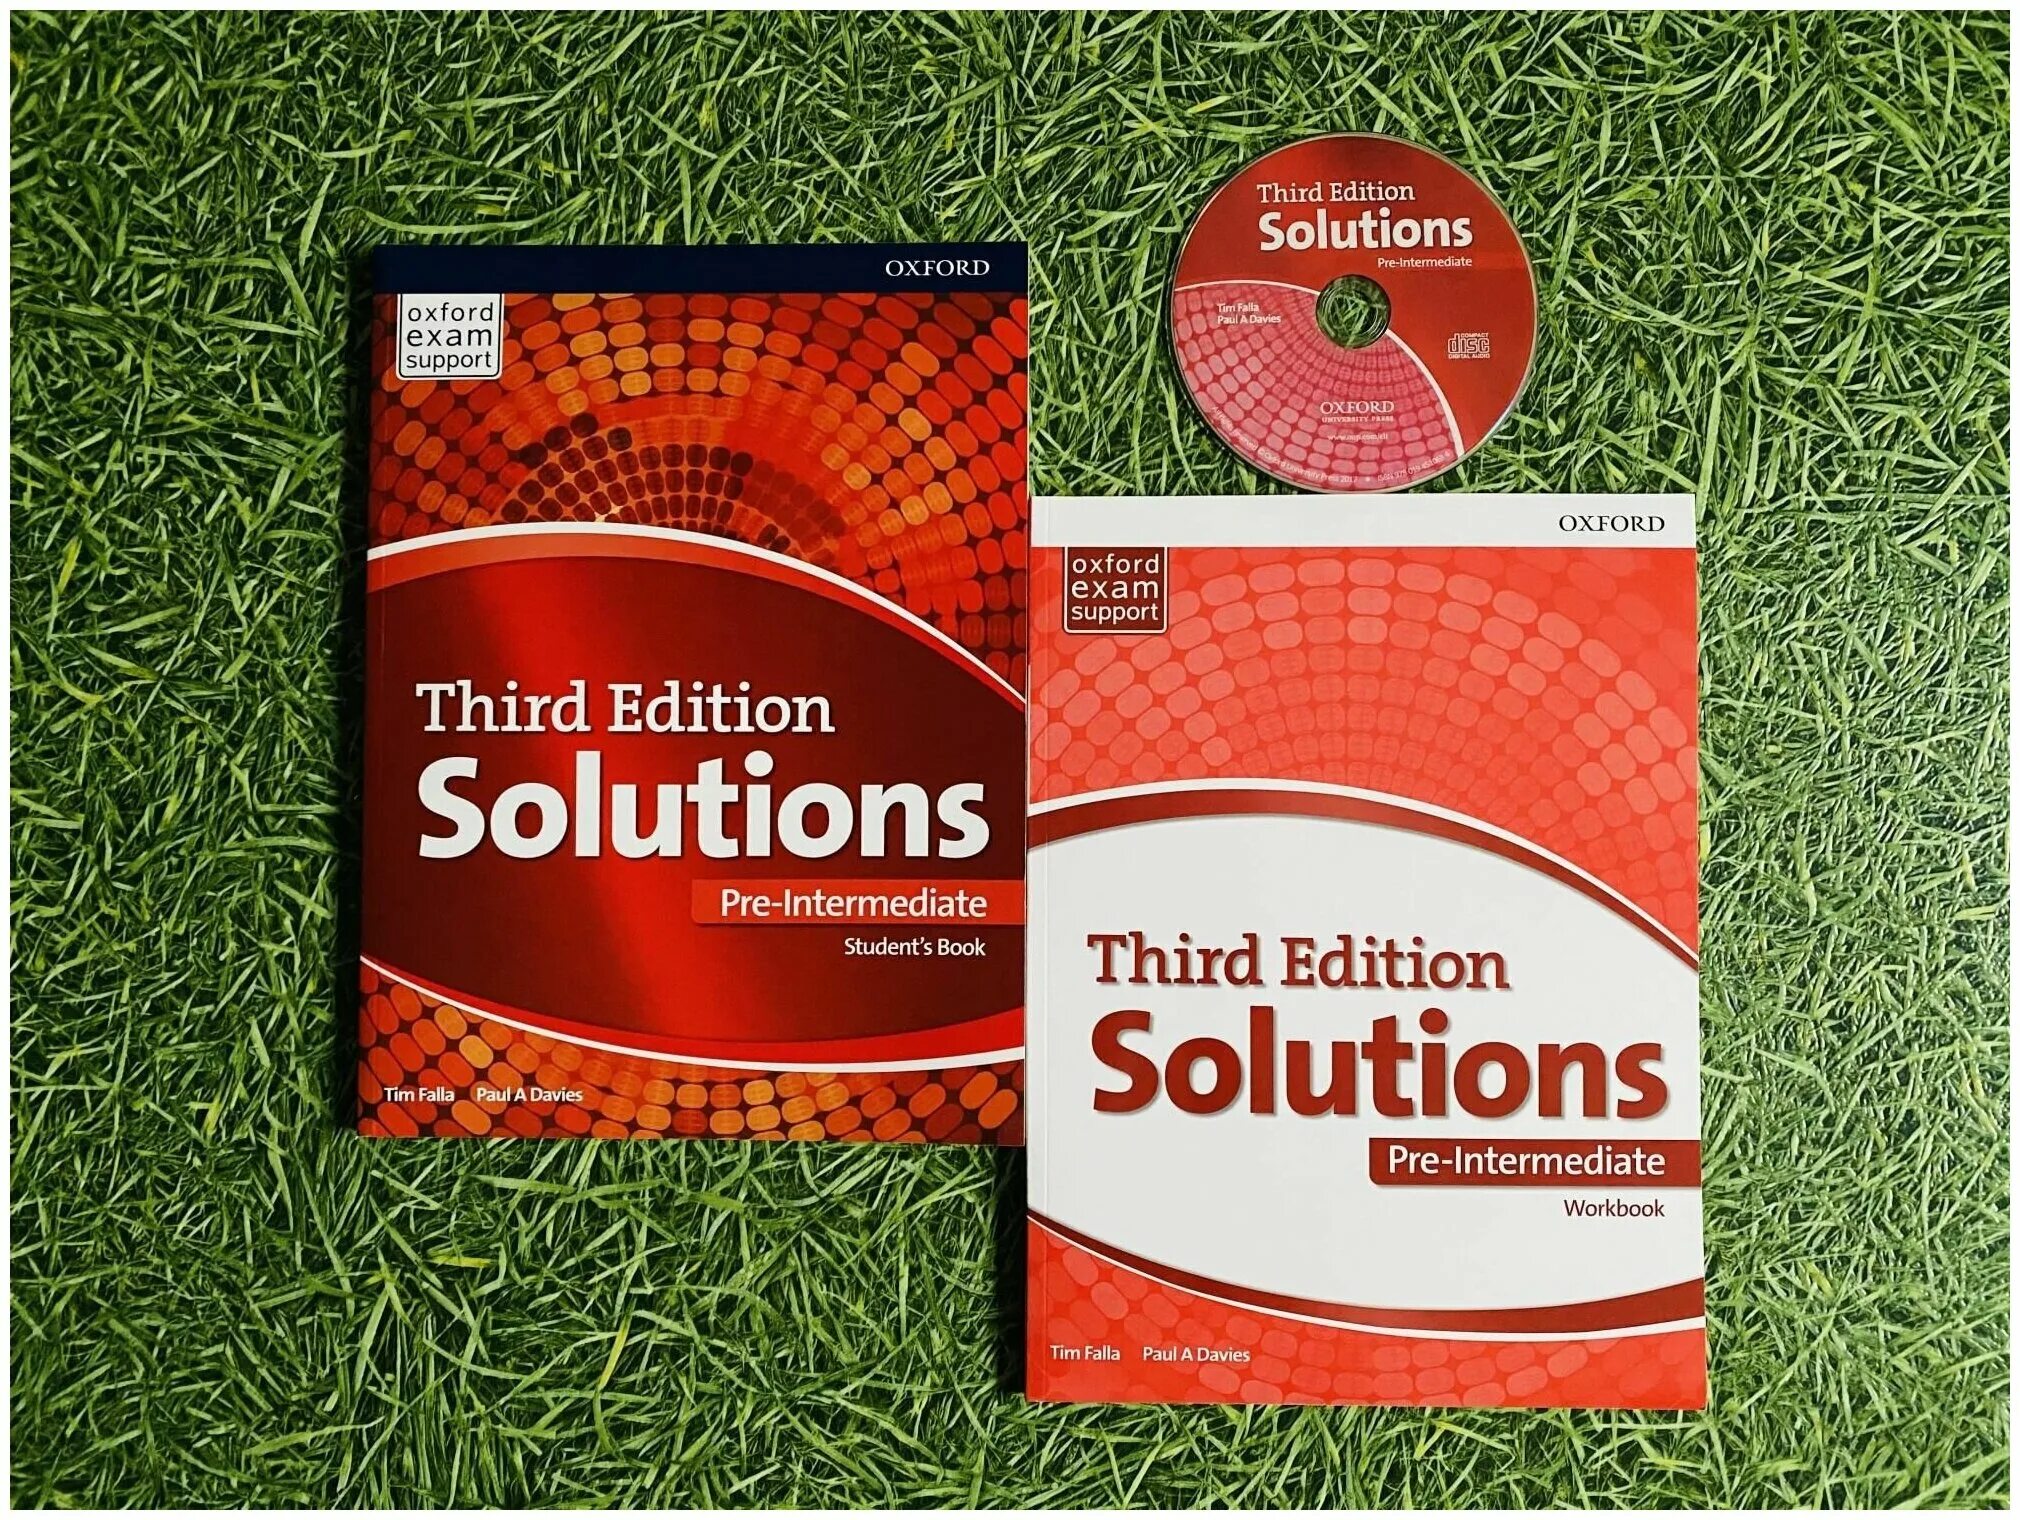 Solution pre intermediate 3rd edition workbook audio. Solutions: pre-Intermediate. Solutions учебник. Solutions pre-Intermediate 3rd. Third Edition solutions.